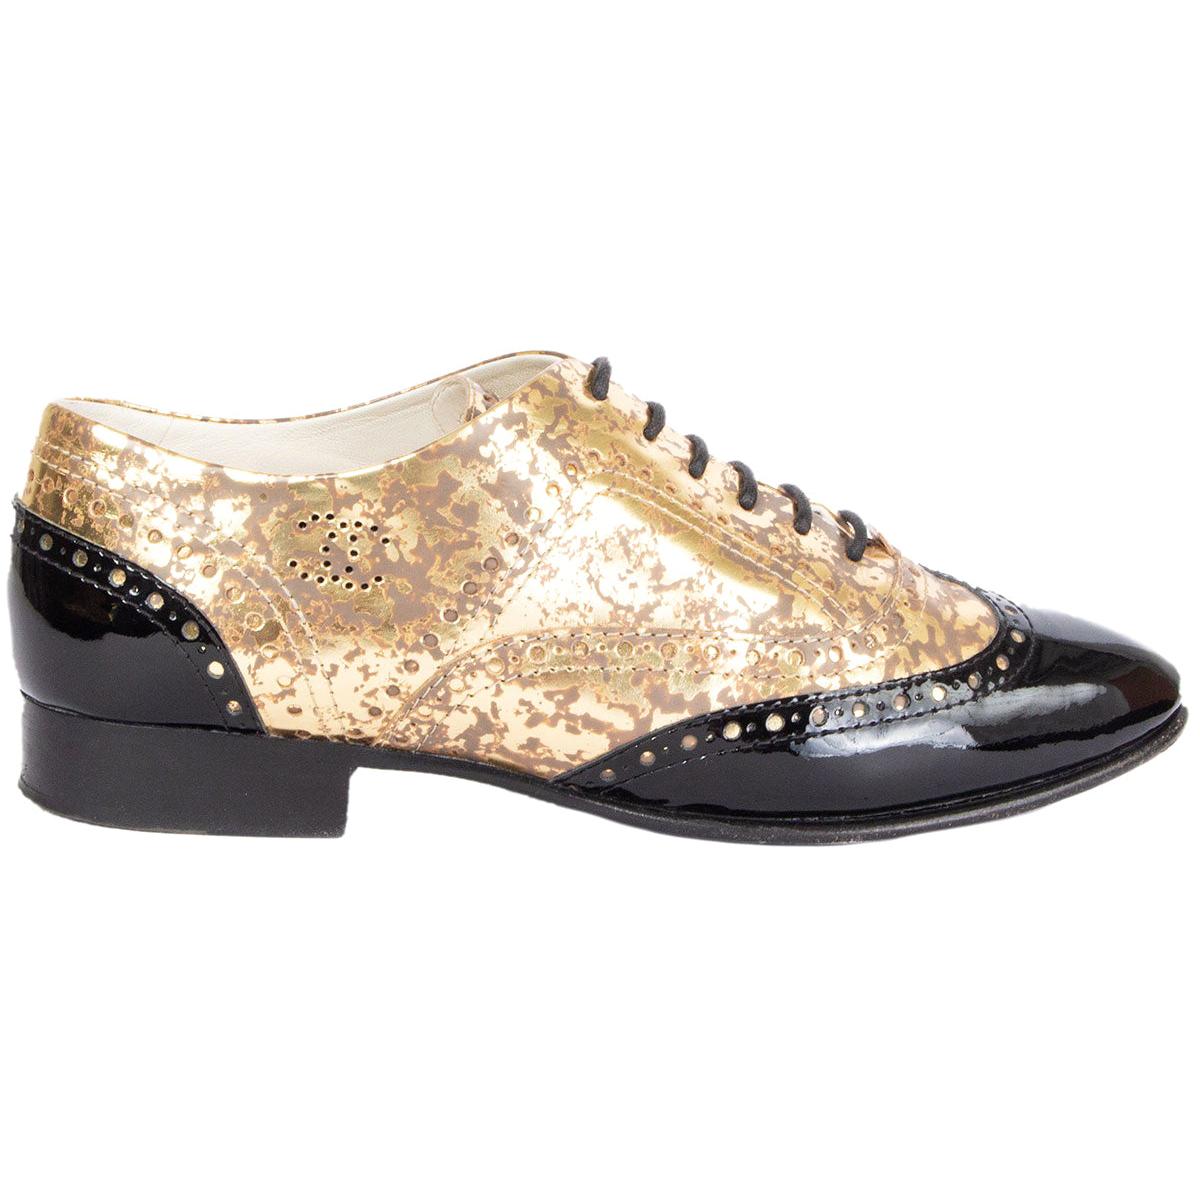 CHANEL metallic gold Brogue Oxford Flats Shoes 39.5